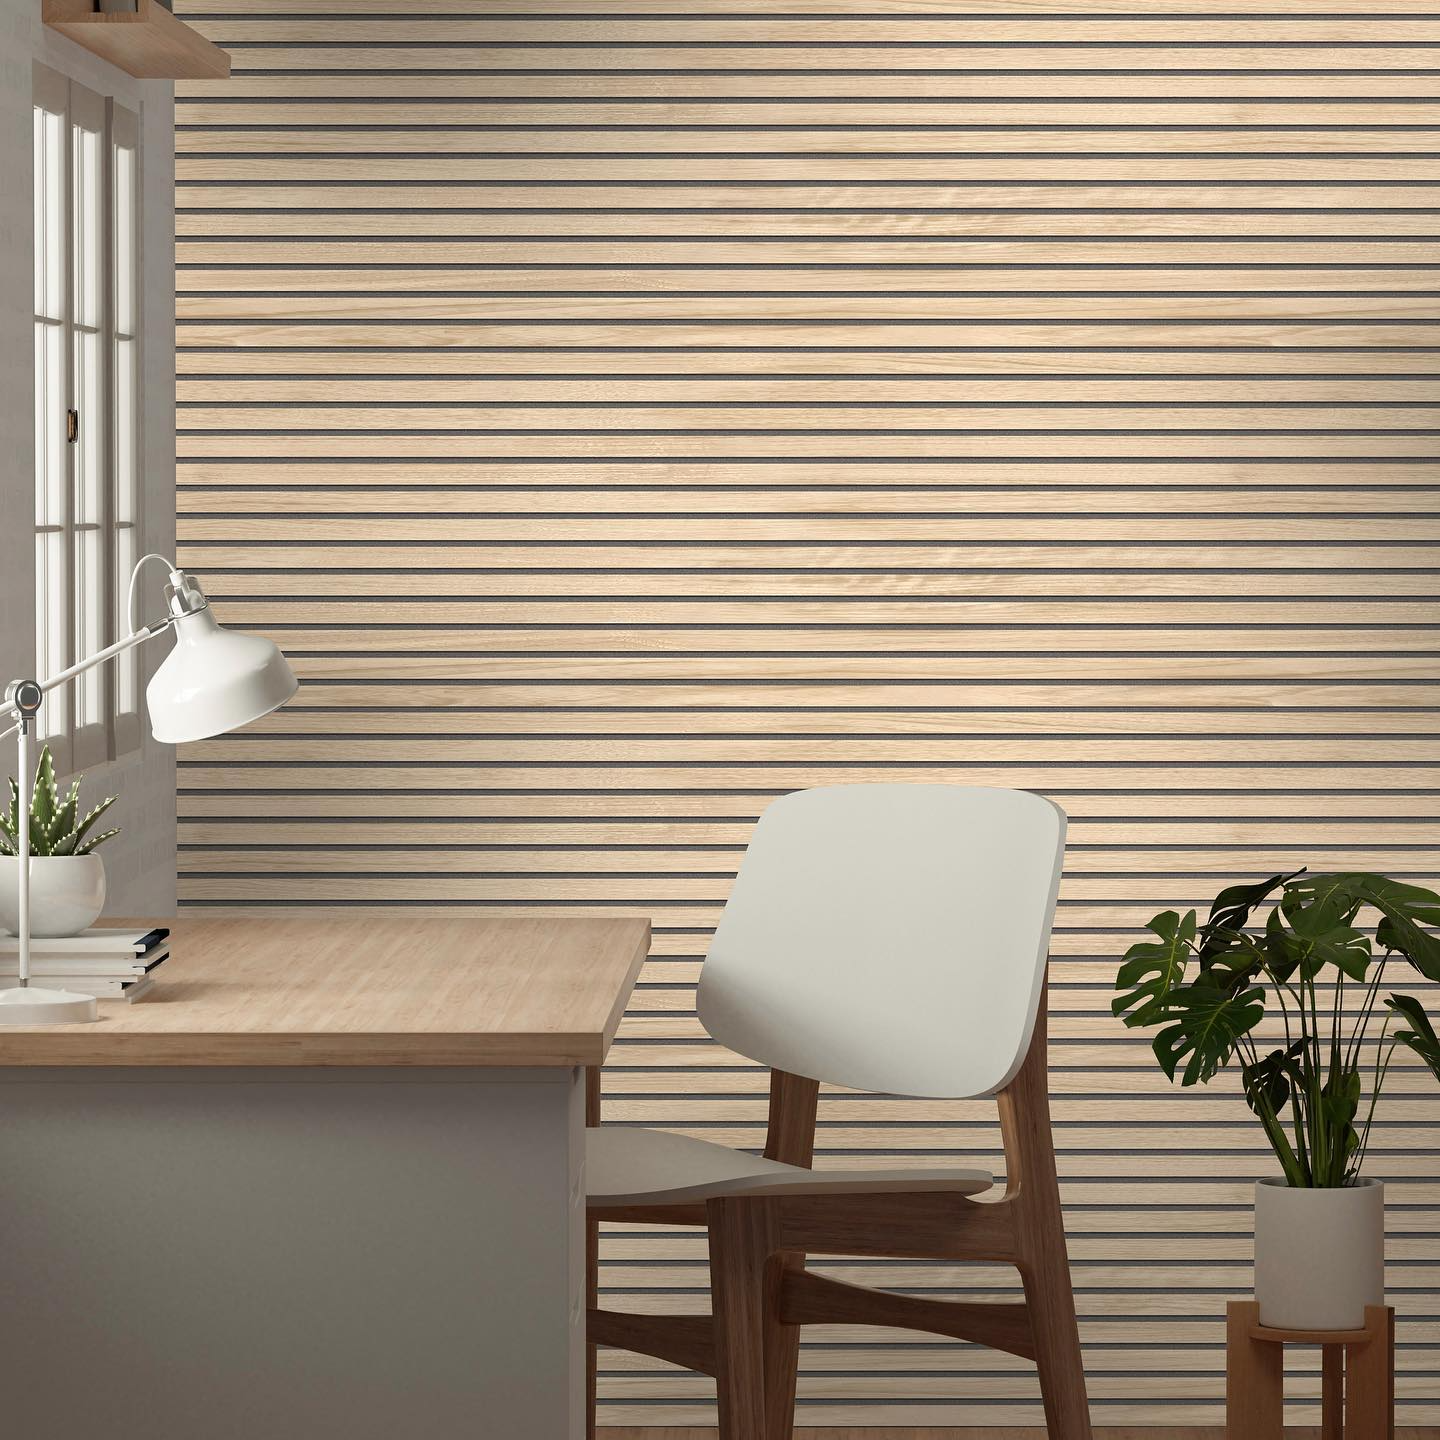 19 Grey Wallpaper For Hallway Ideas - Sleek-chic UK Home Interiors Blog